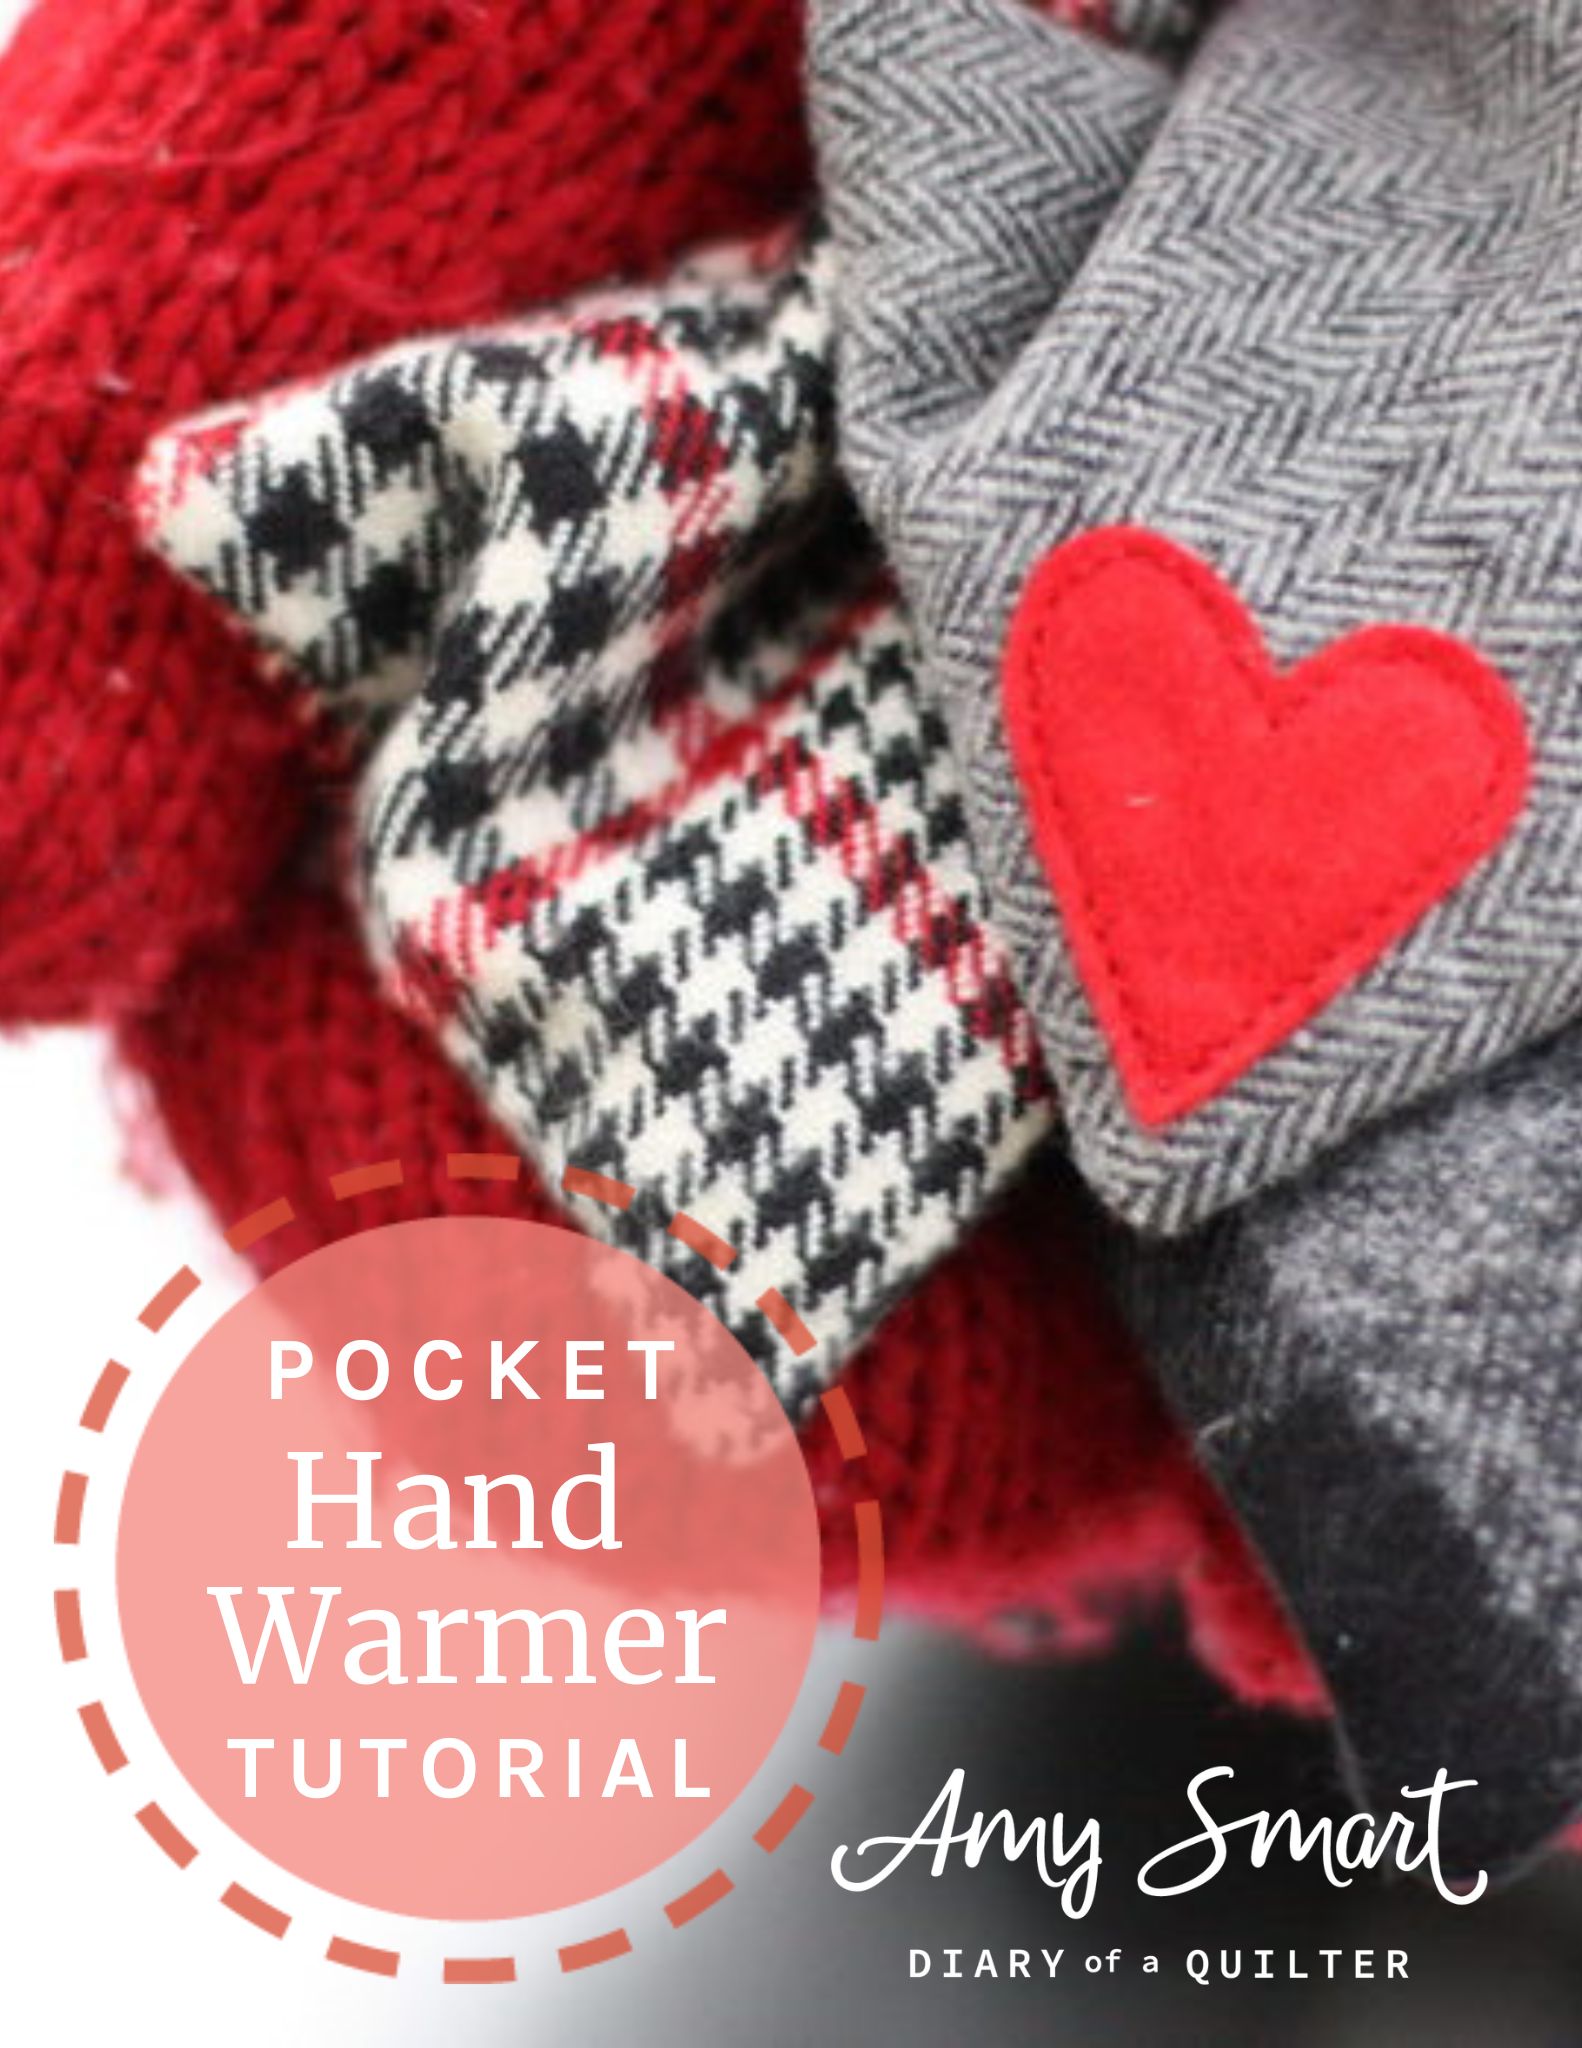 How to Make Pocket Hand Warmers